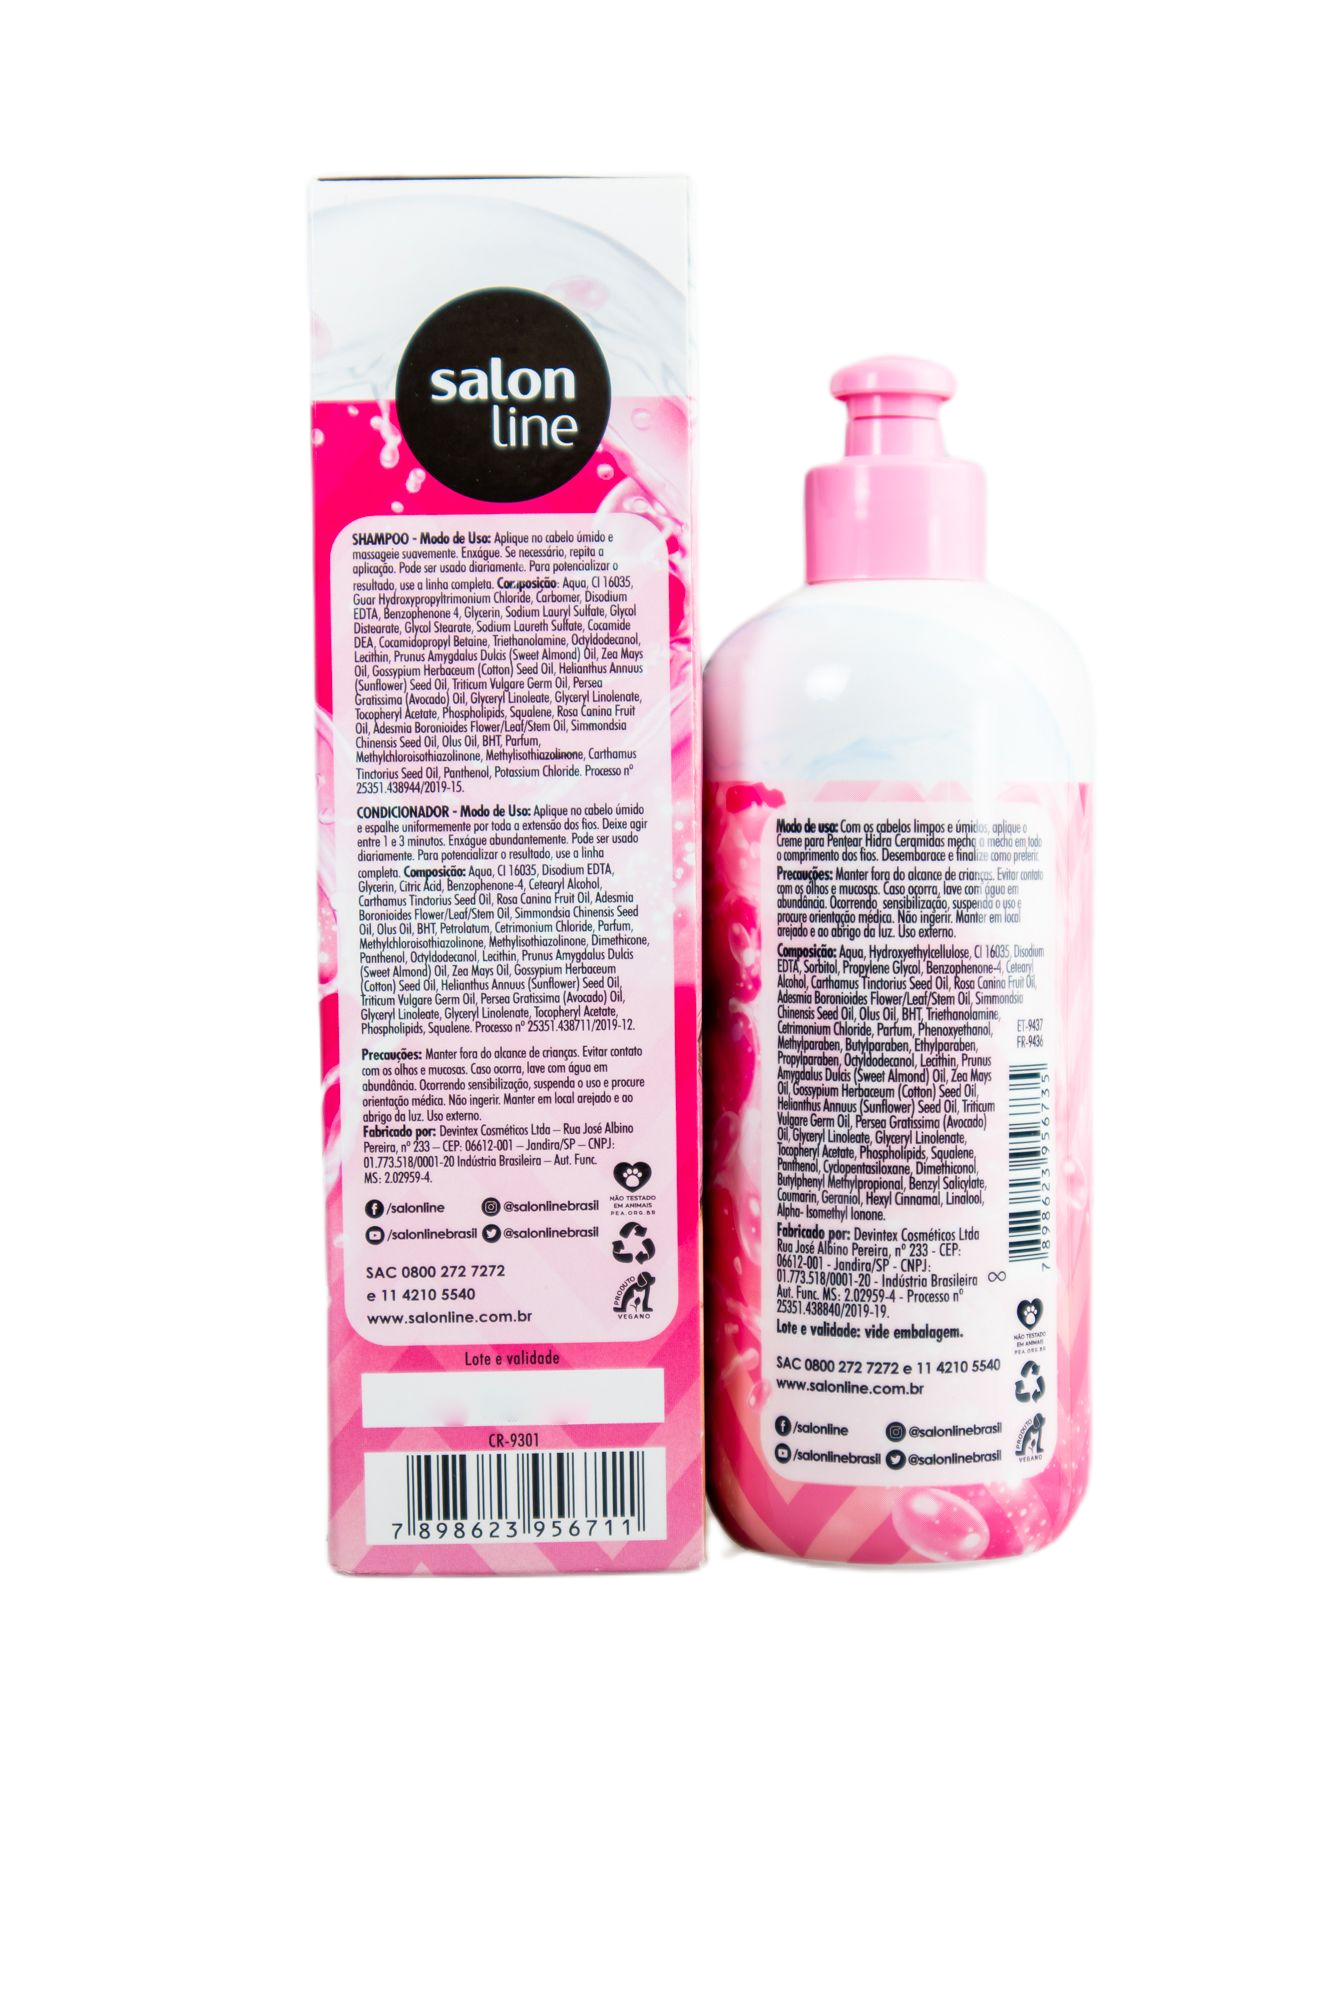 Salon Line Home Care Hydra Vegetable Ceramides Brightness Strenght Treatment Kit 3x300ml - Salon Line